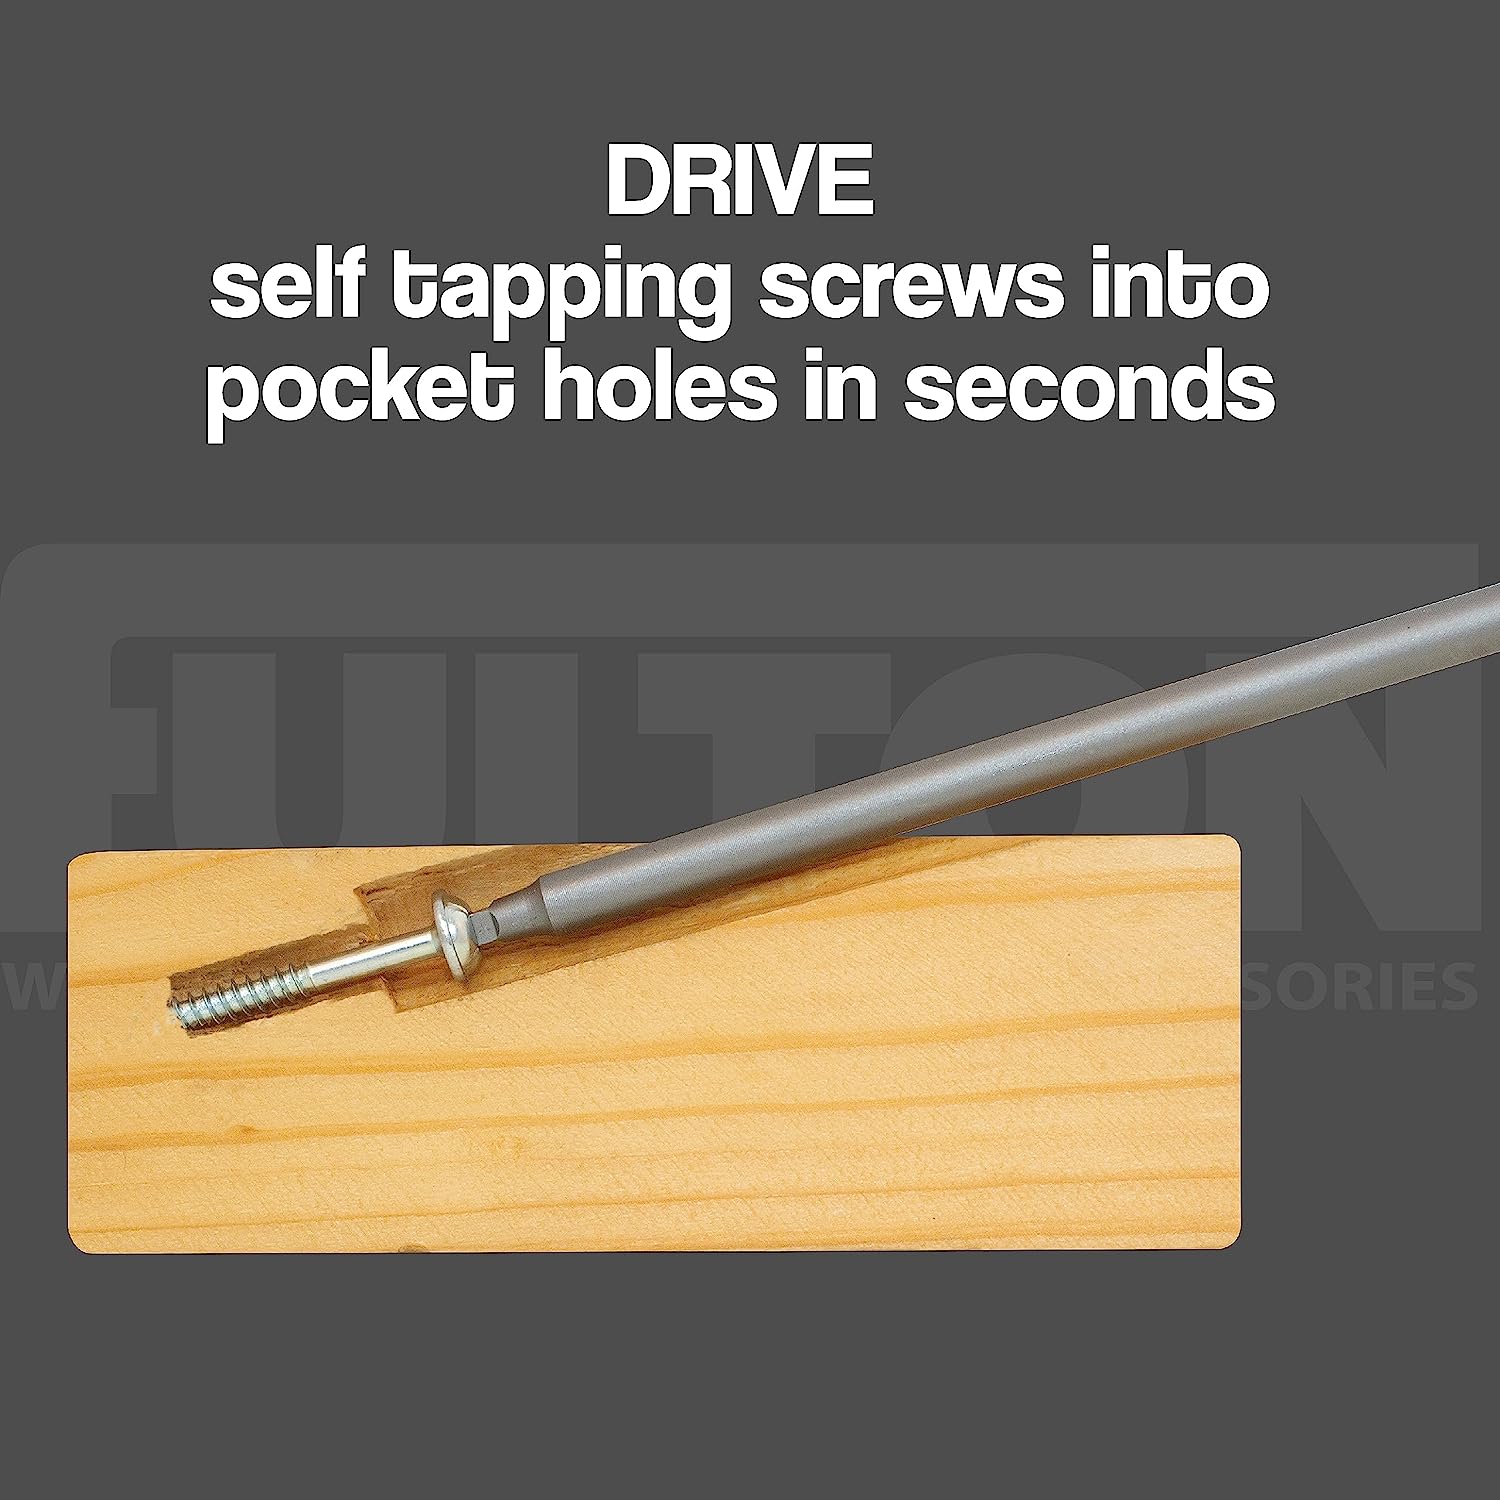 500 Zinc Self-Tapping Pocket Hole Screws - Fine Threads